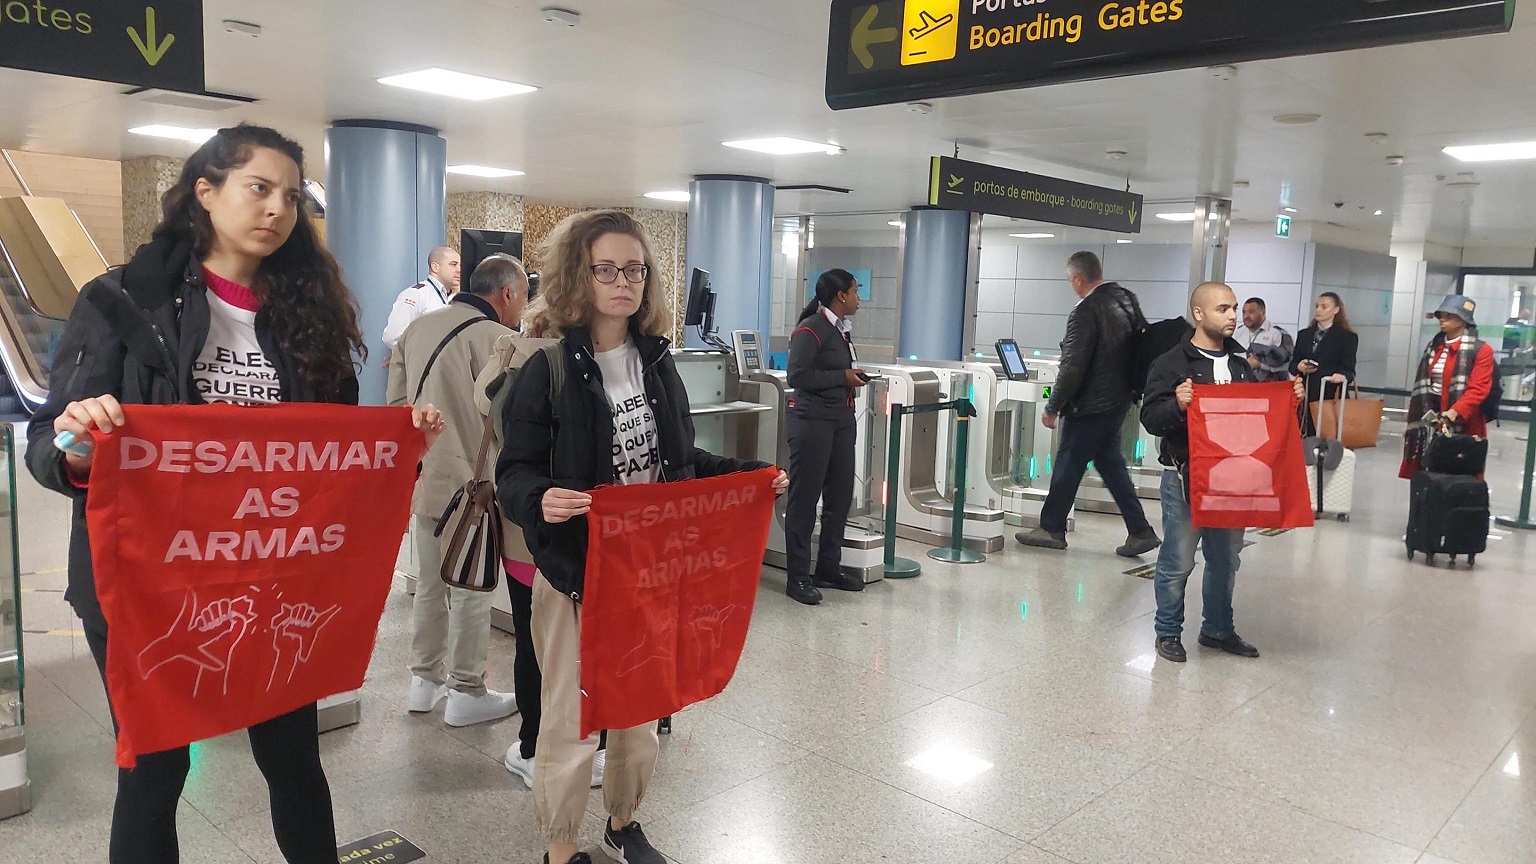 Ativistas climáticos pintam leitores das portas de embarque do aeroporto de Lisboa